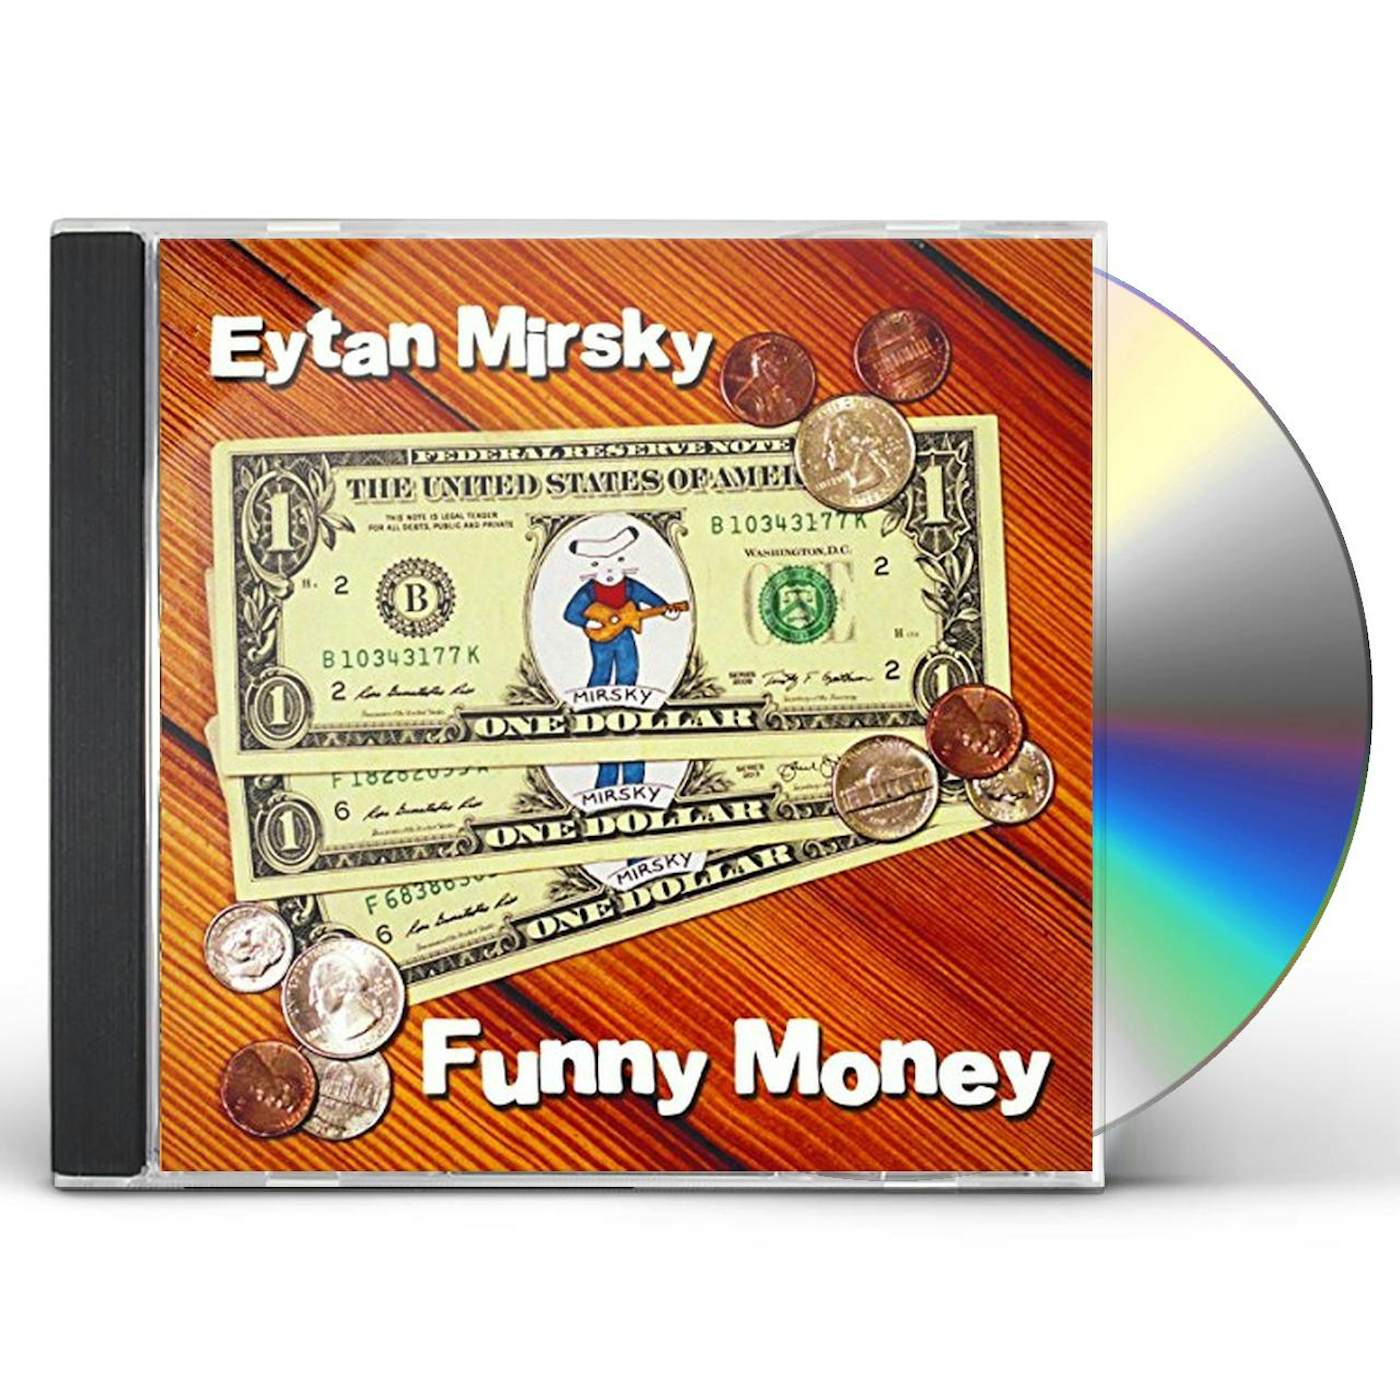 Eytan Mirsky FUNNY MONEY CD